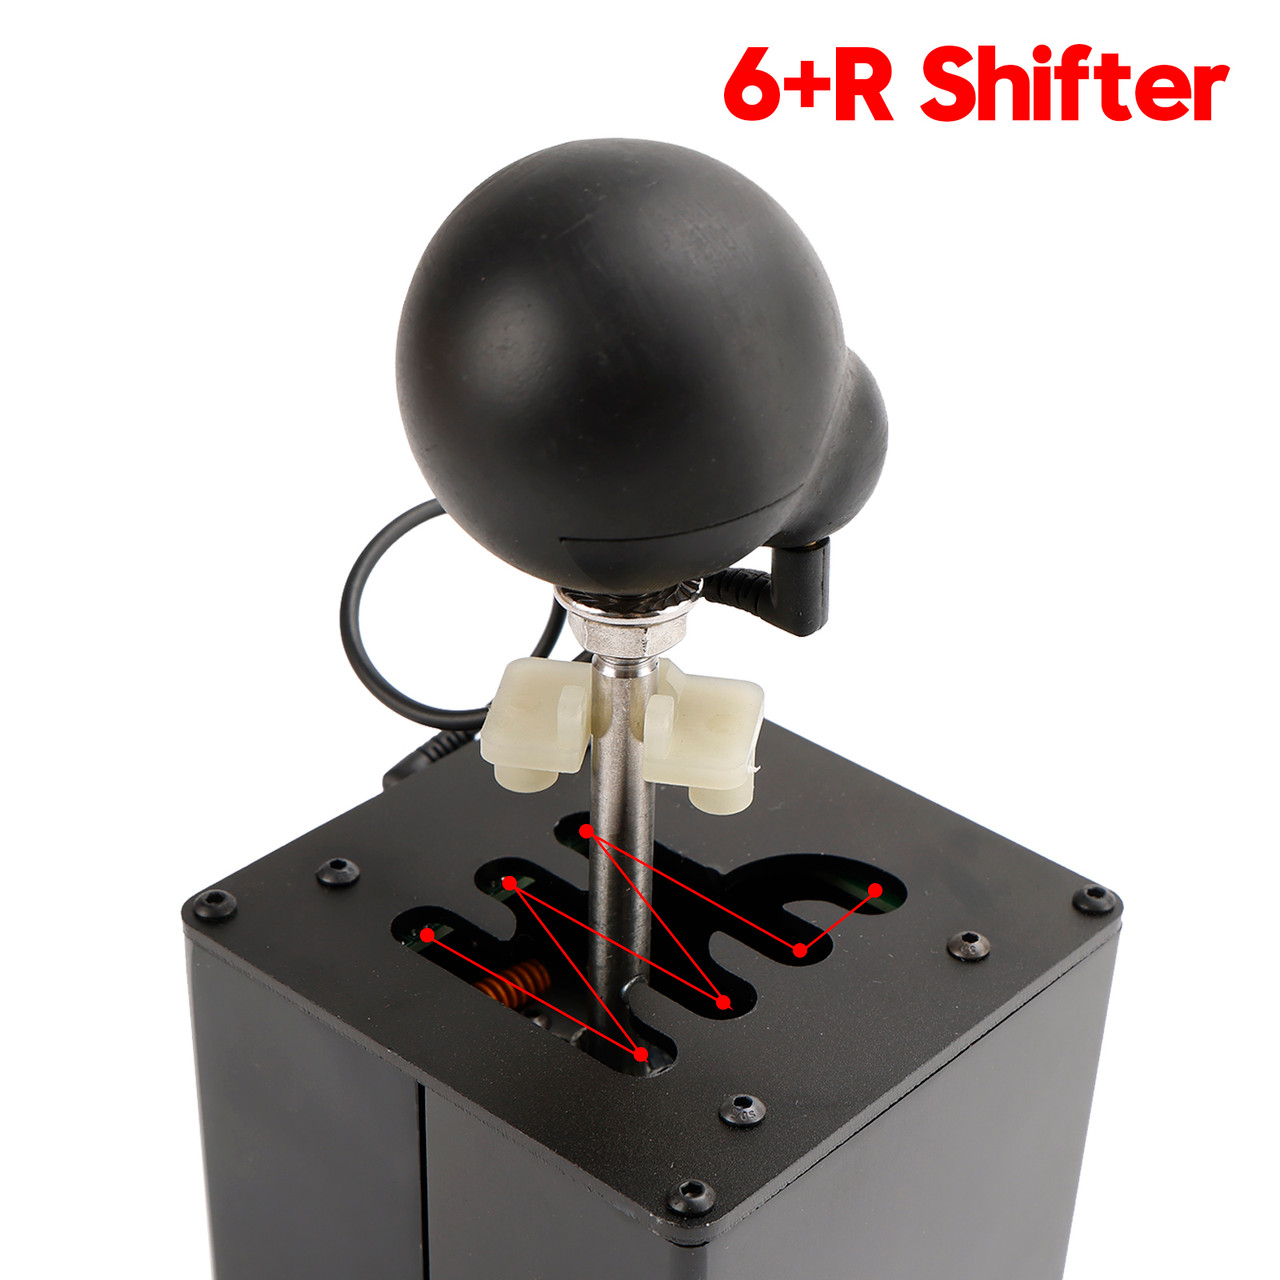 6+R USB Simulator Gear shifter for Logitech G29 G27 G25 G920 Steering Wheel PC